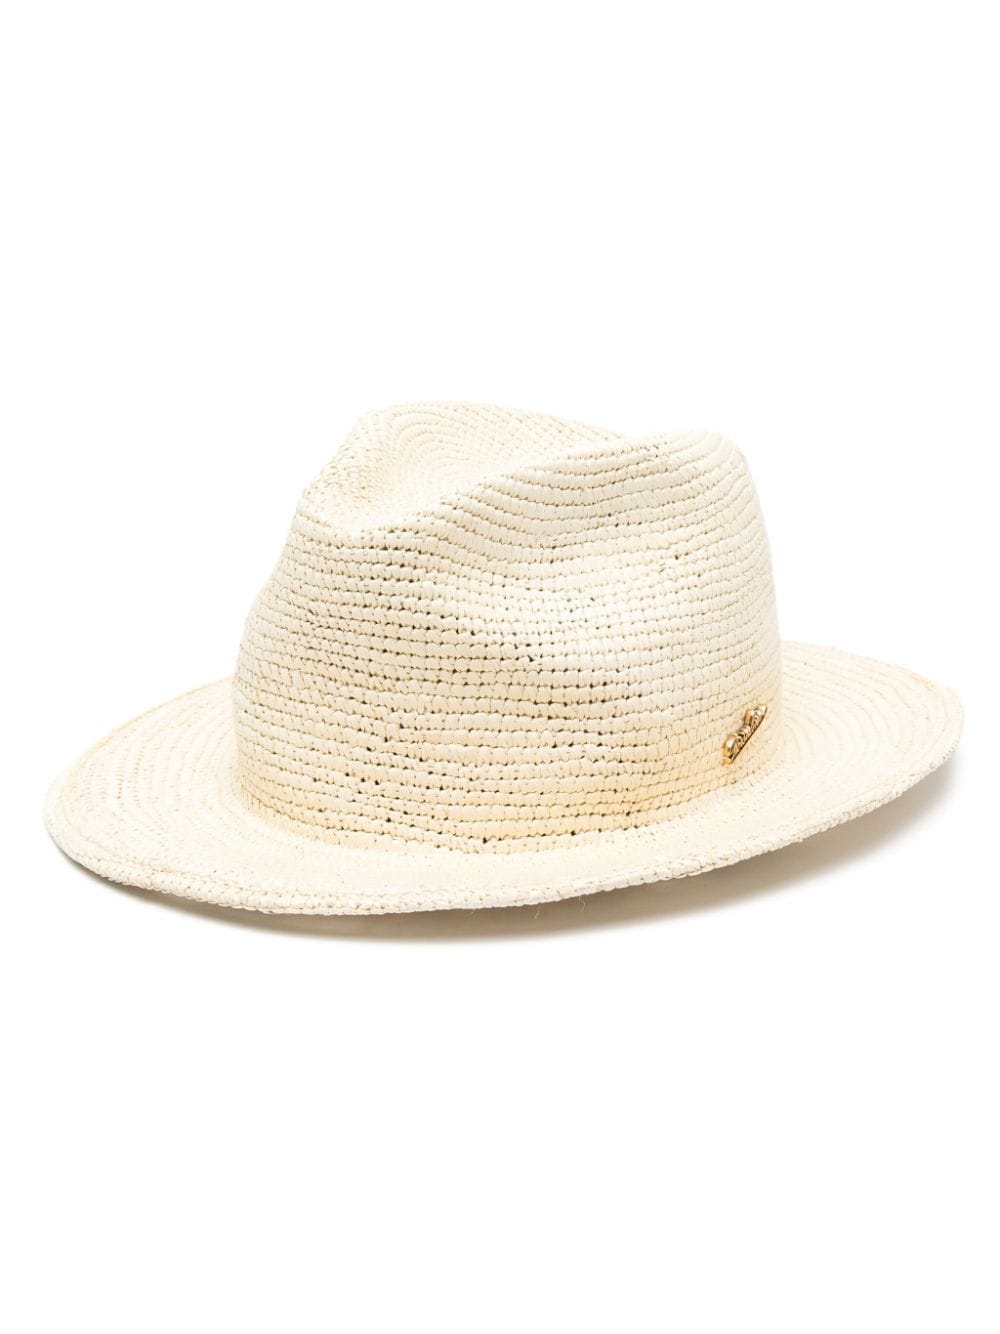 Borsalino BORSALINO- Clochard Straw Panama Hat